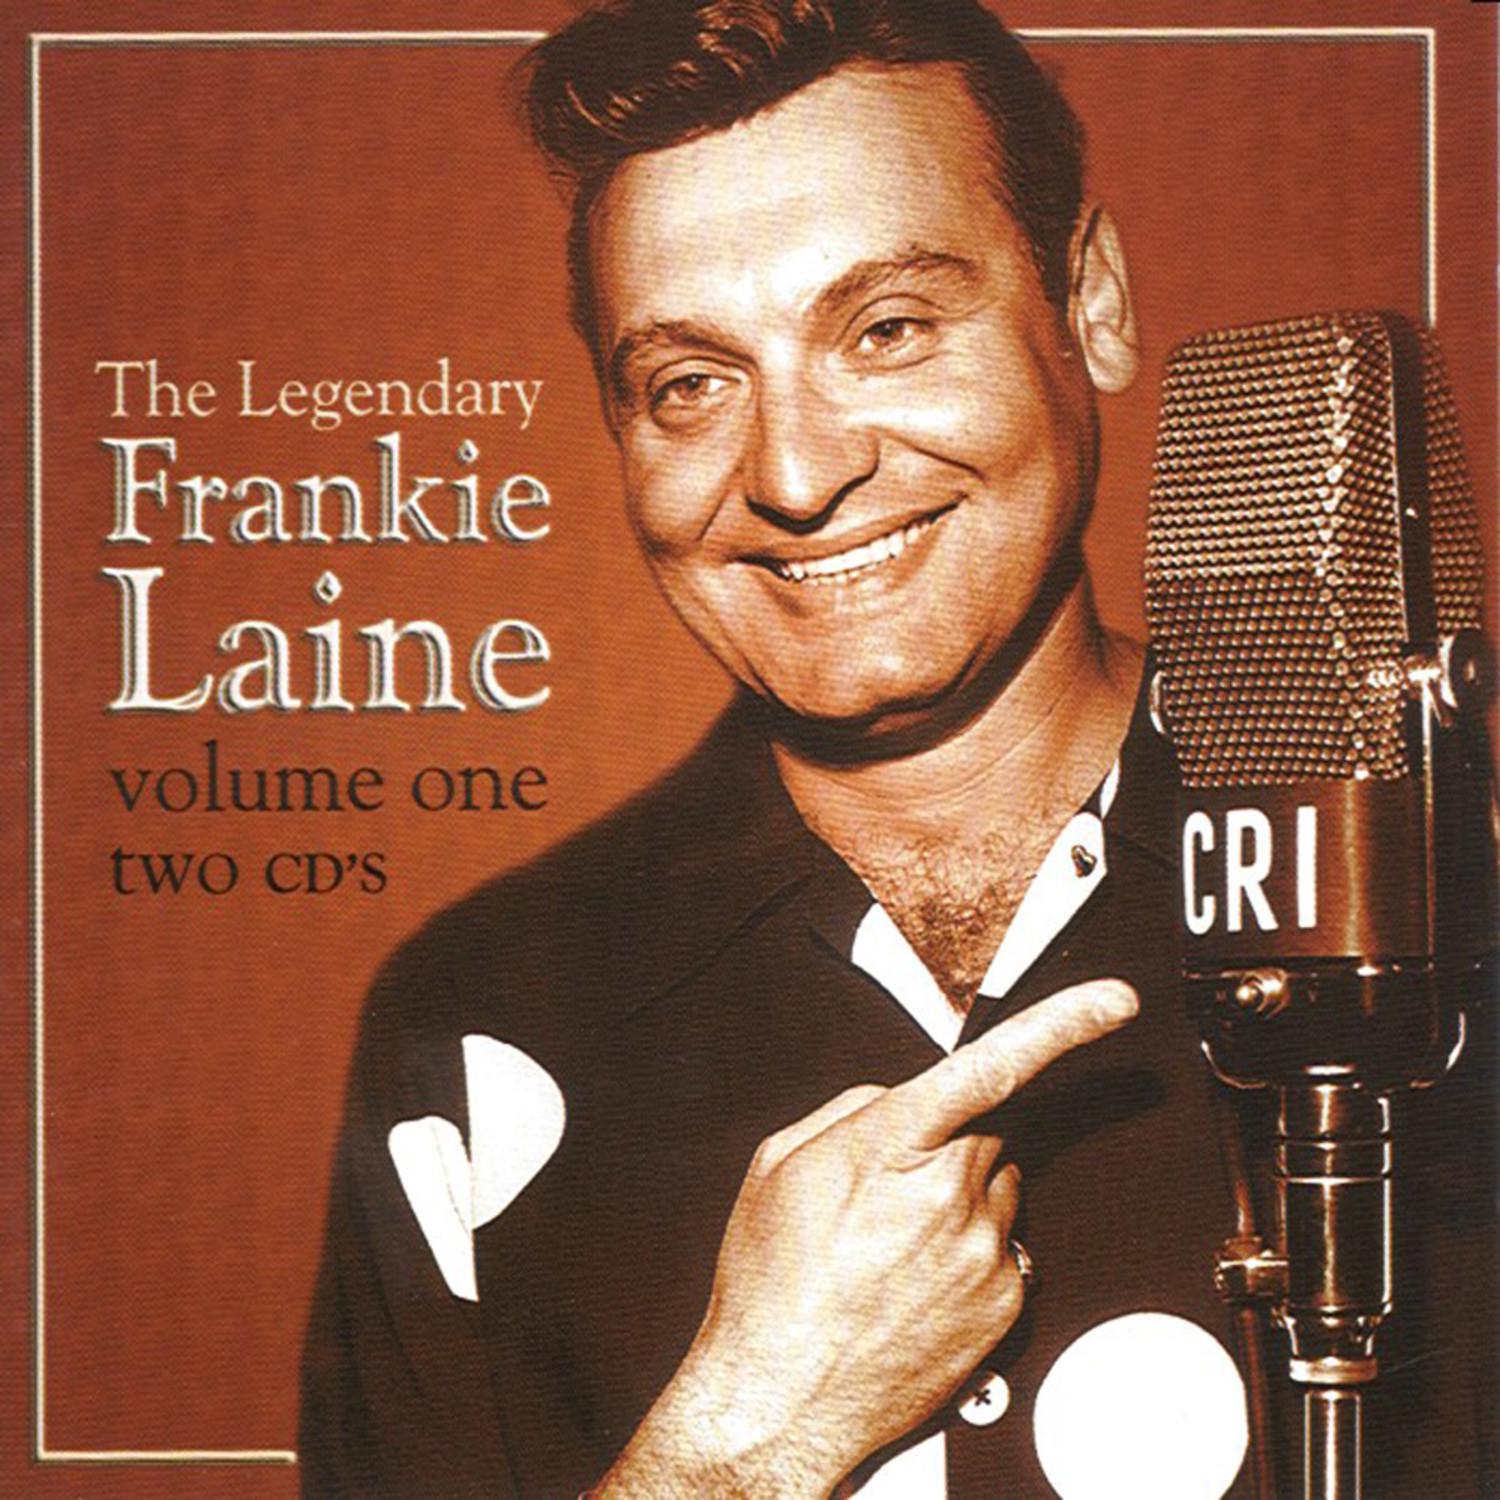 Legendary Frankie Laine Vol 1